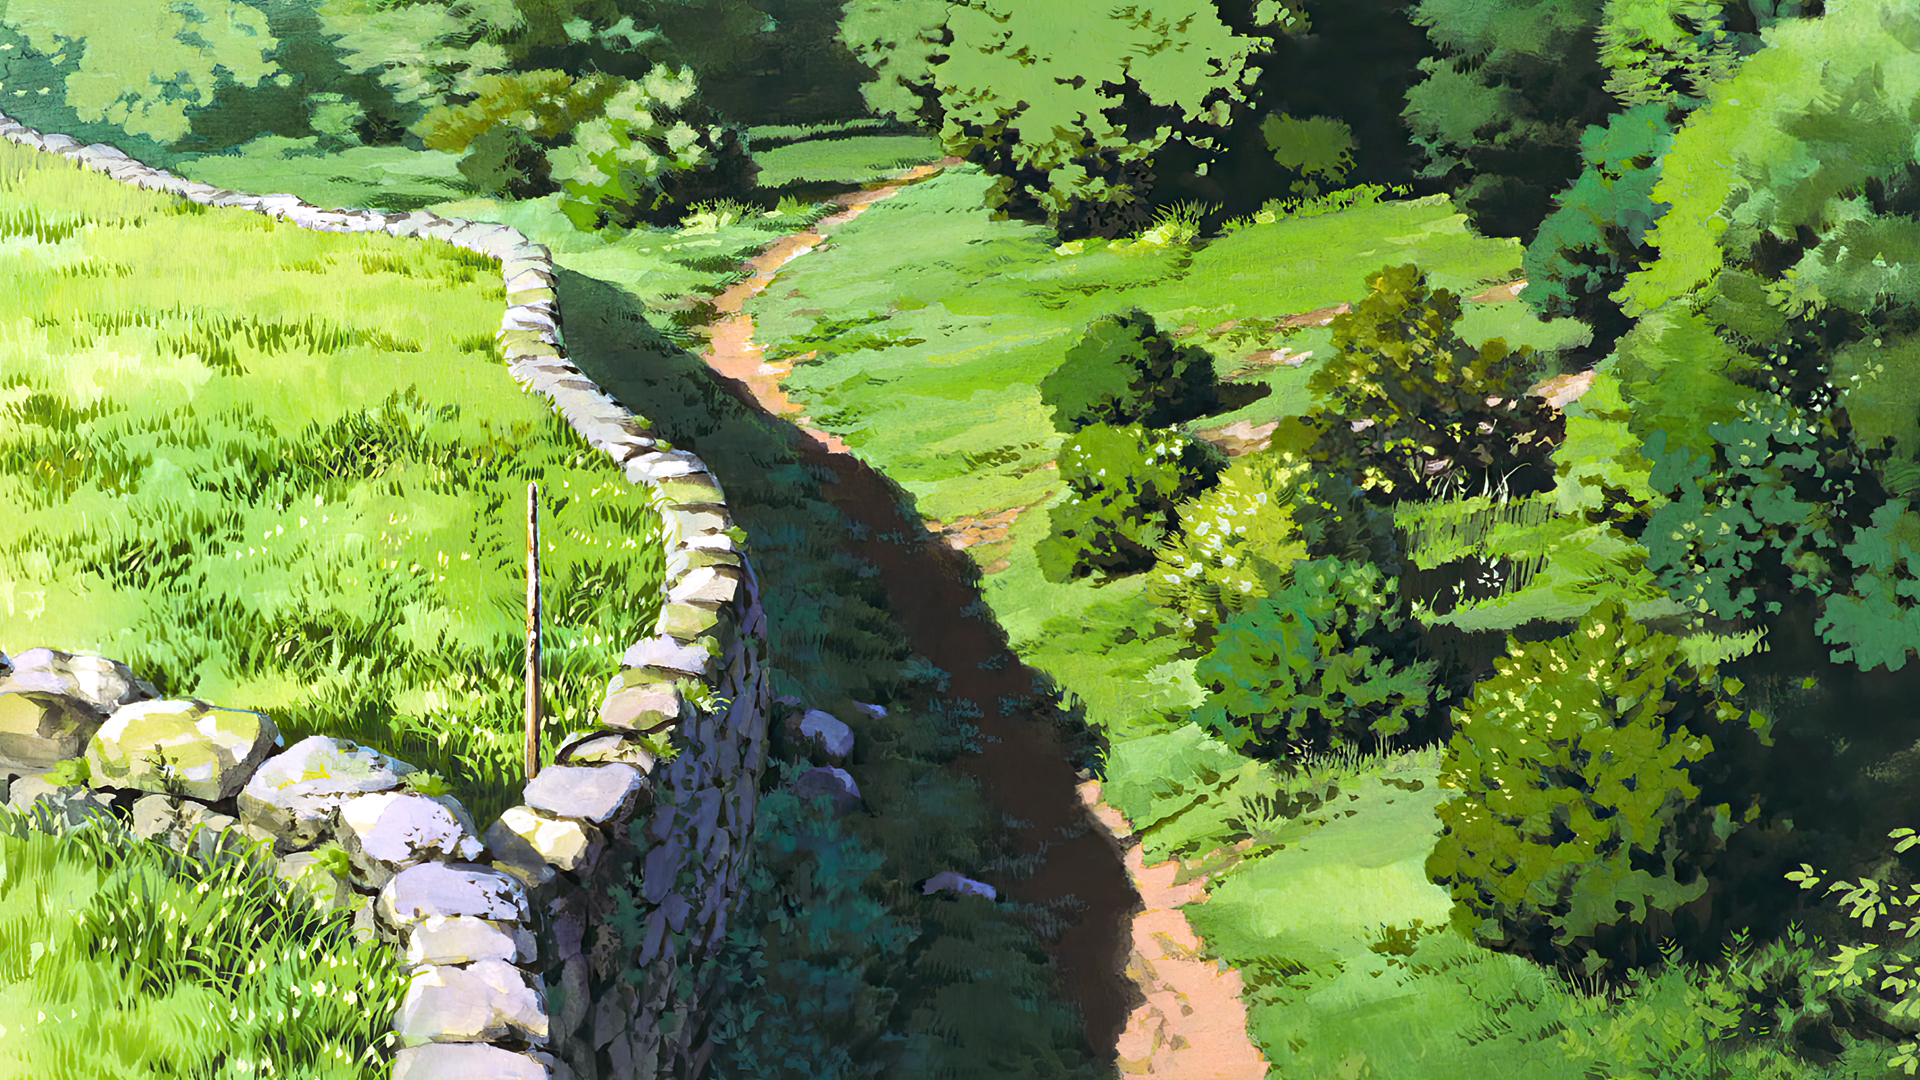 Anime 1920x1080 Princess Mononoke animated movies anime animation film stills Studio Ghibli Hayao Miyazaki stone fence trees path grass